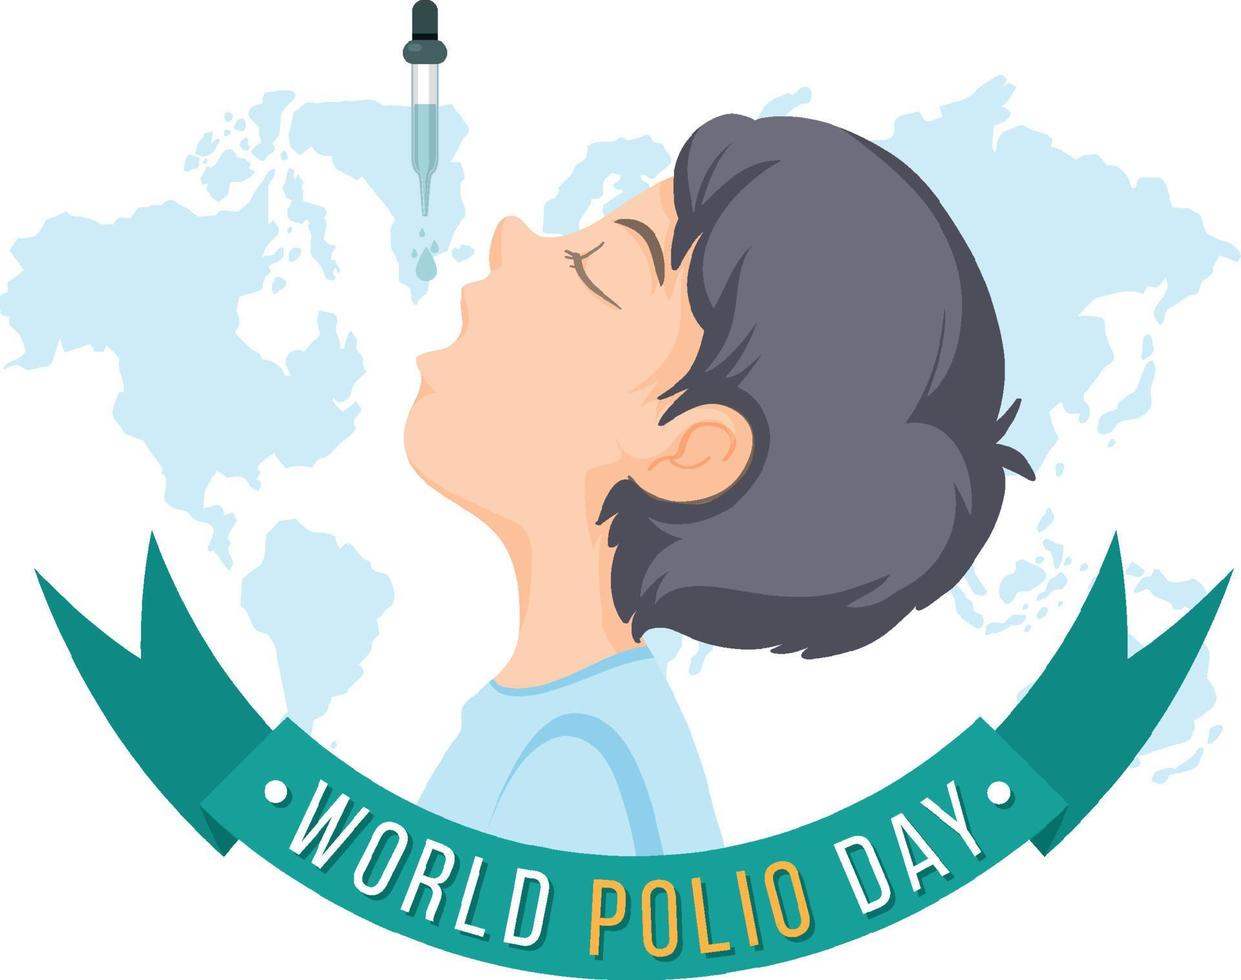 World Polio Day banner with a boy receiving oral polio vaccine vector